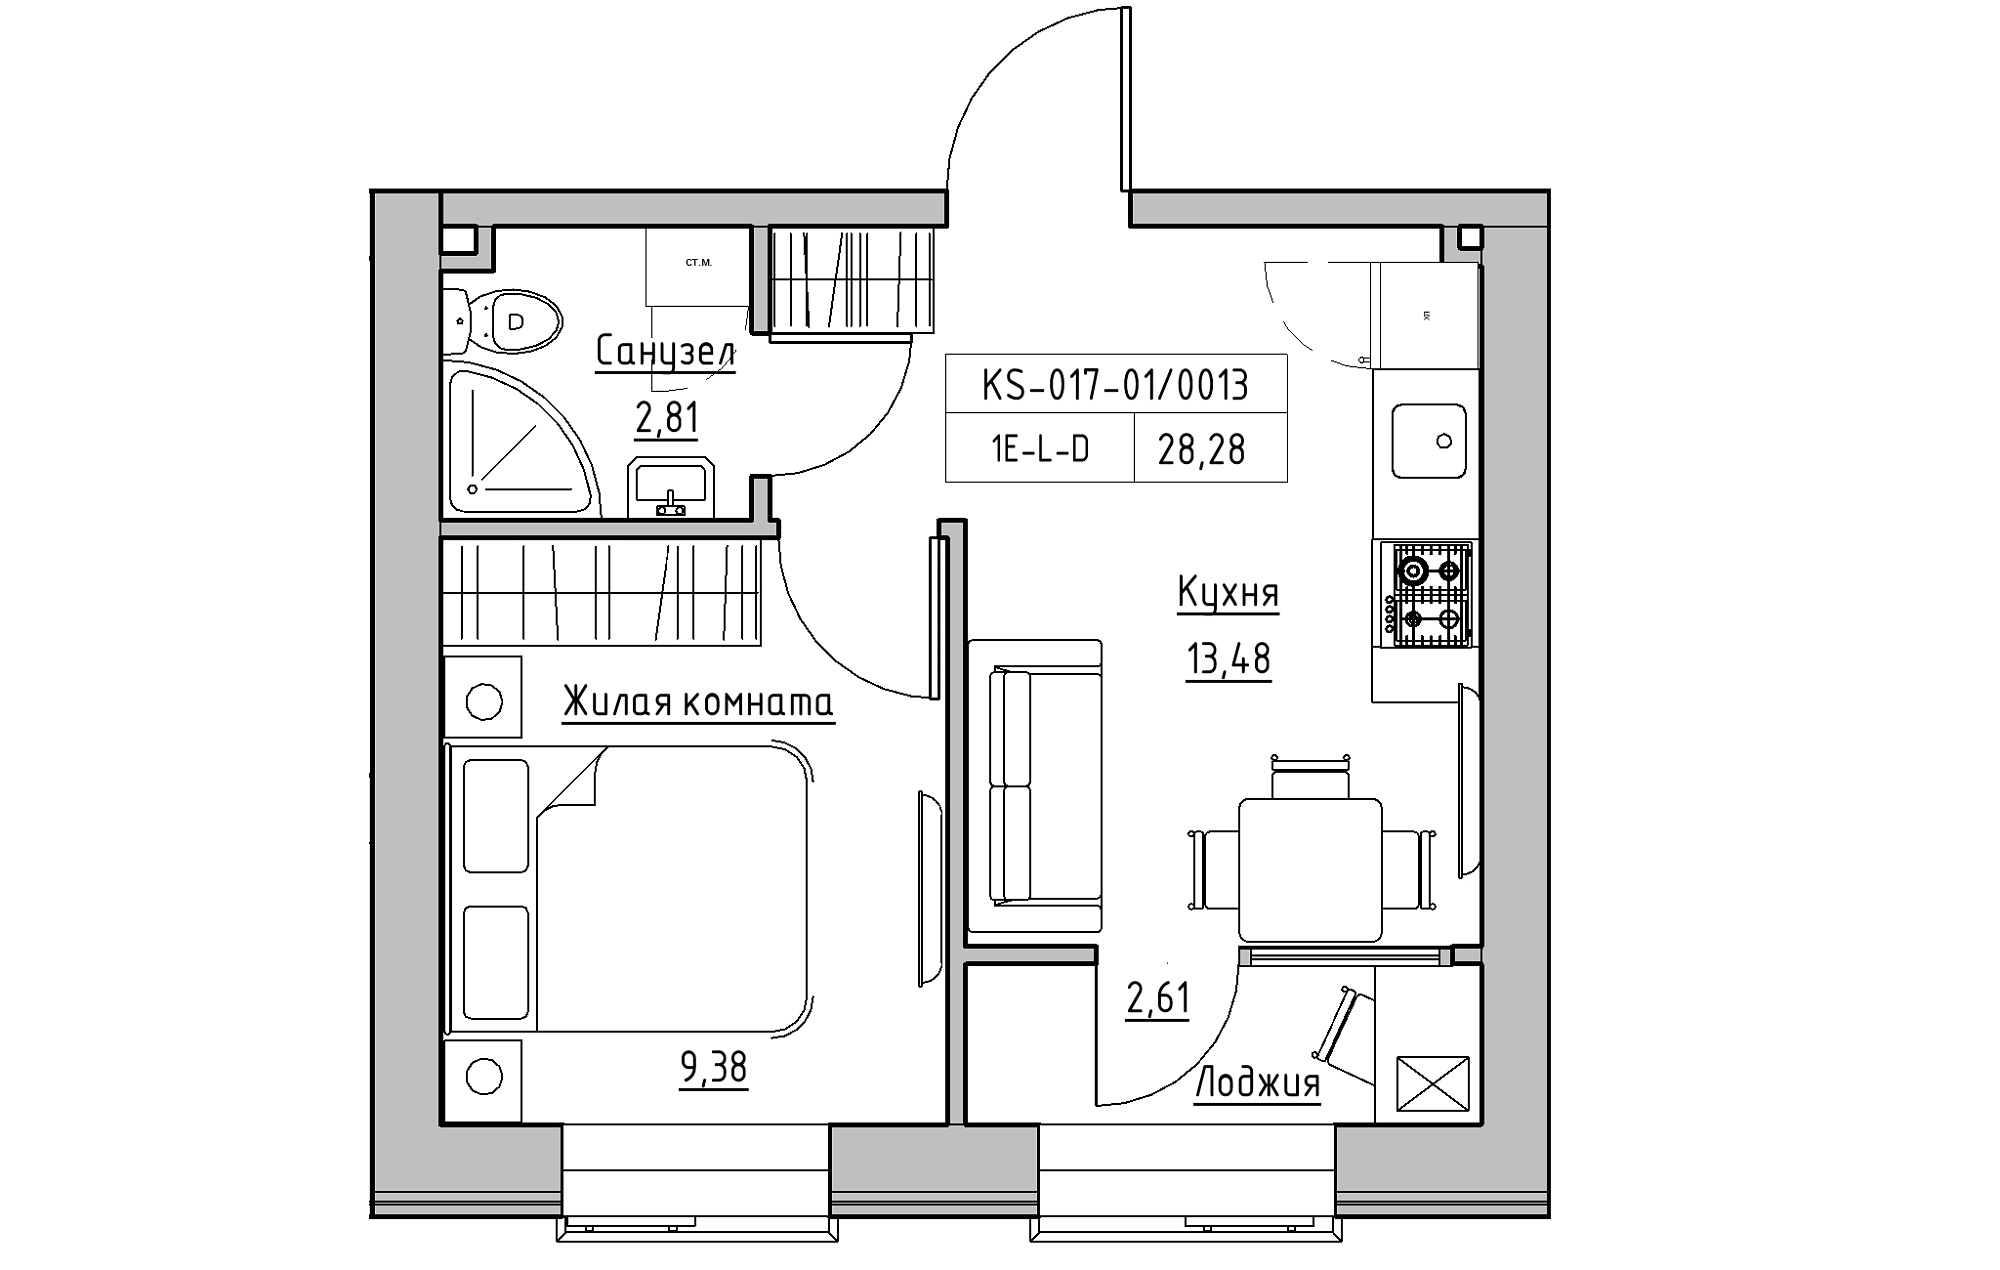 Planning 1-rm flats area 28.28m2, KS-017-01/0013.